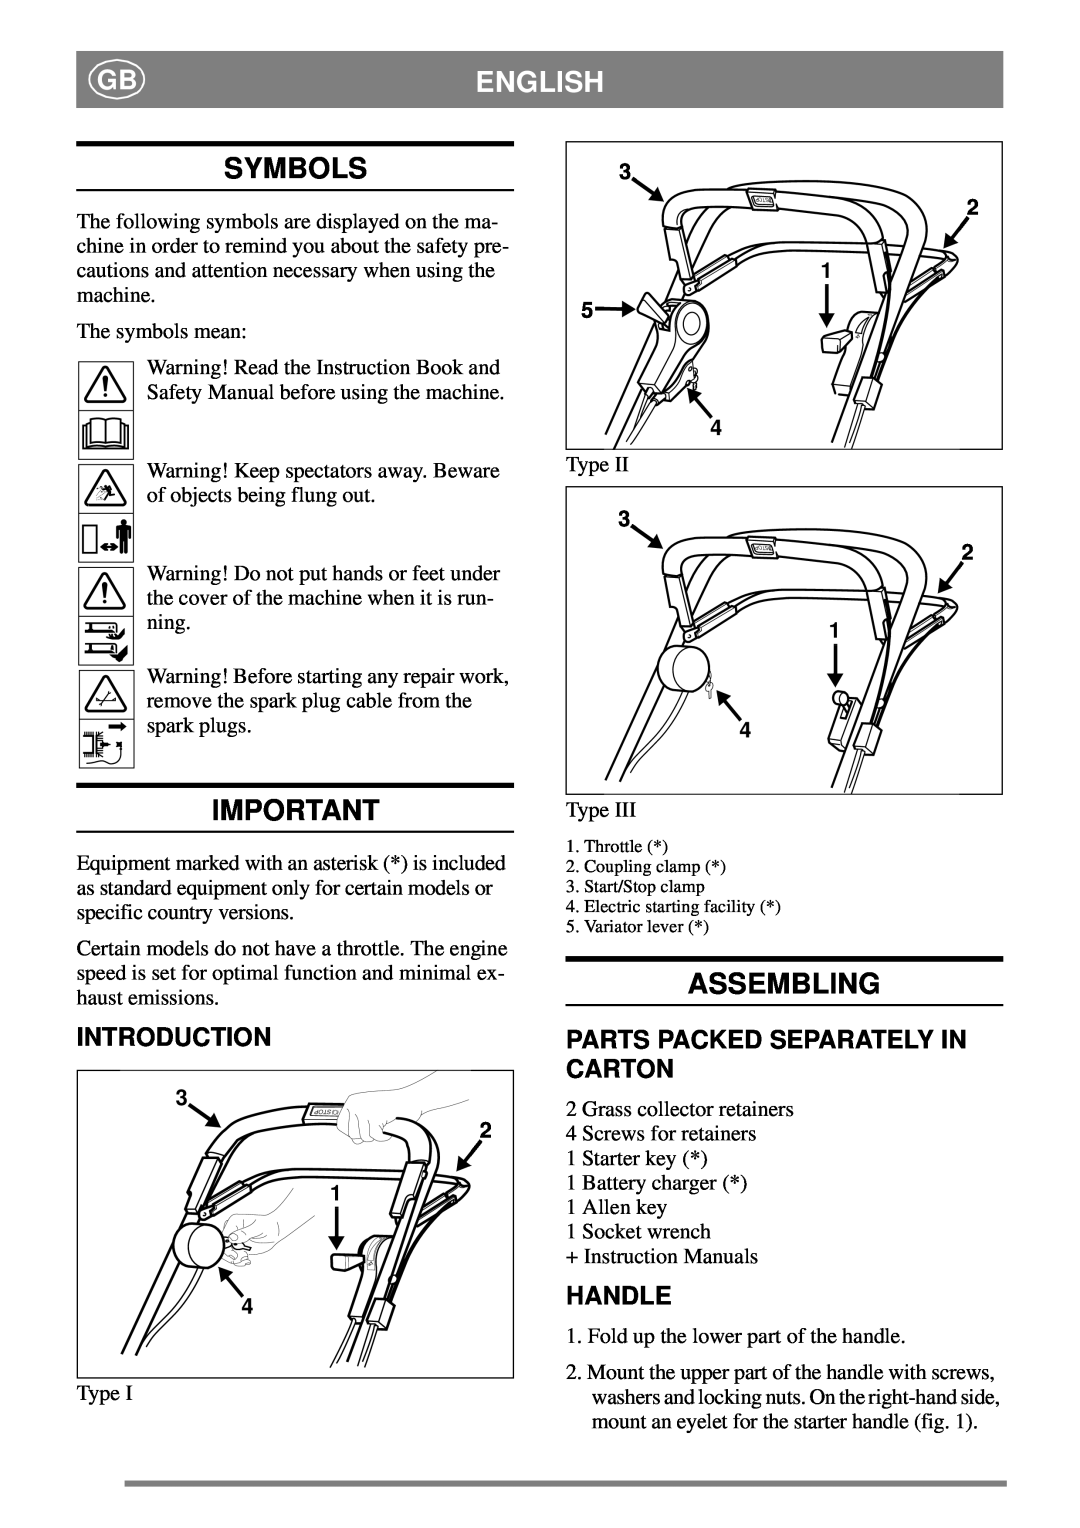 Stiga 8211-0208-08 manual English, Symbols, Assembling, Introduction, Parts Packed Separately In Carton, Handle 